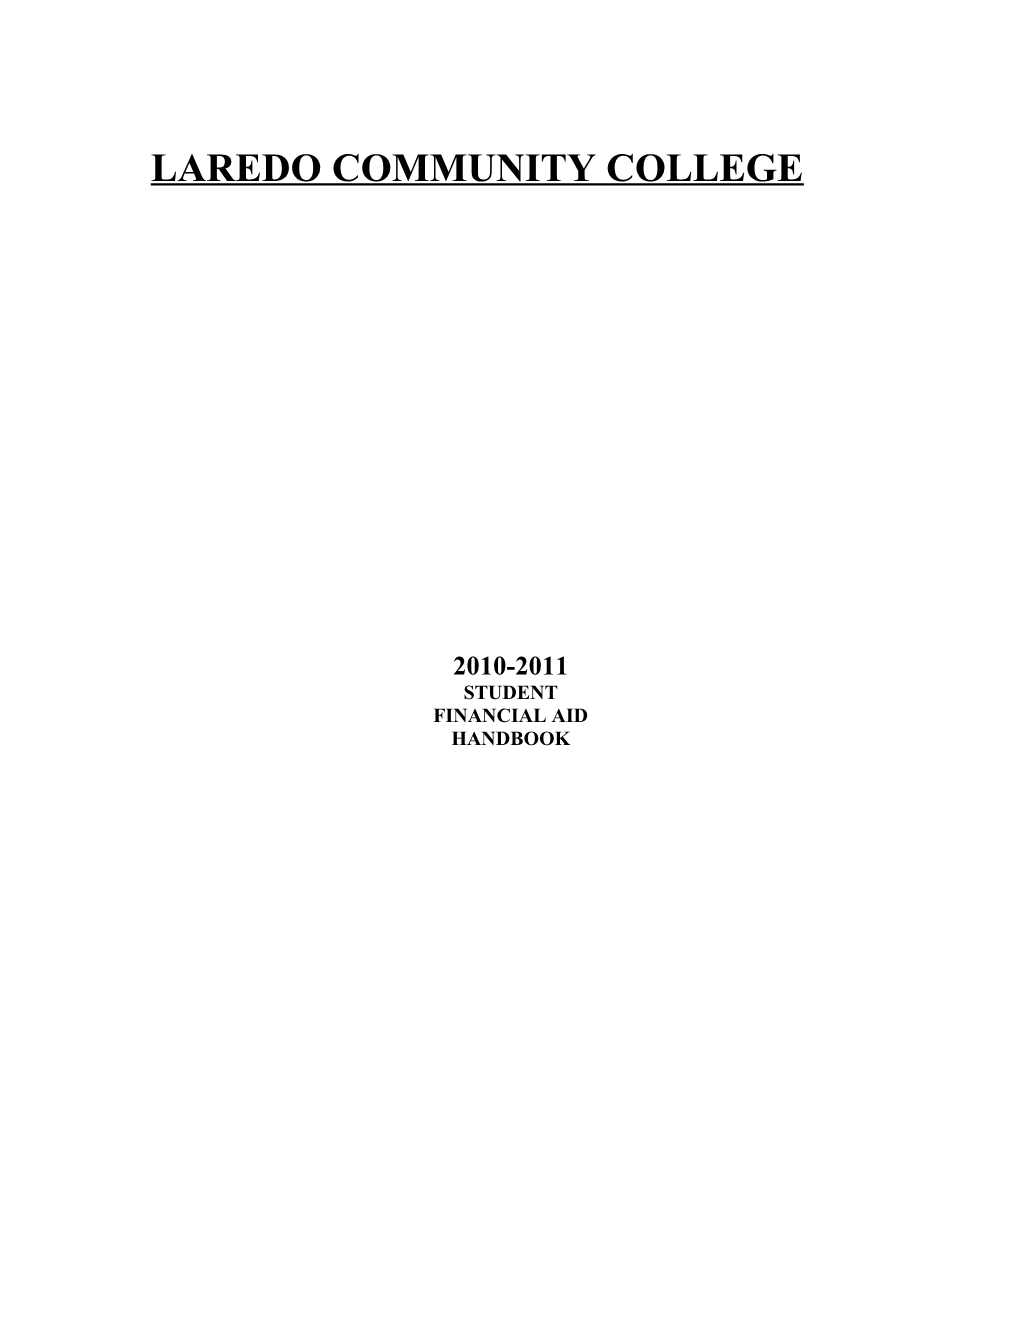 Laredo Community College s2